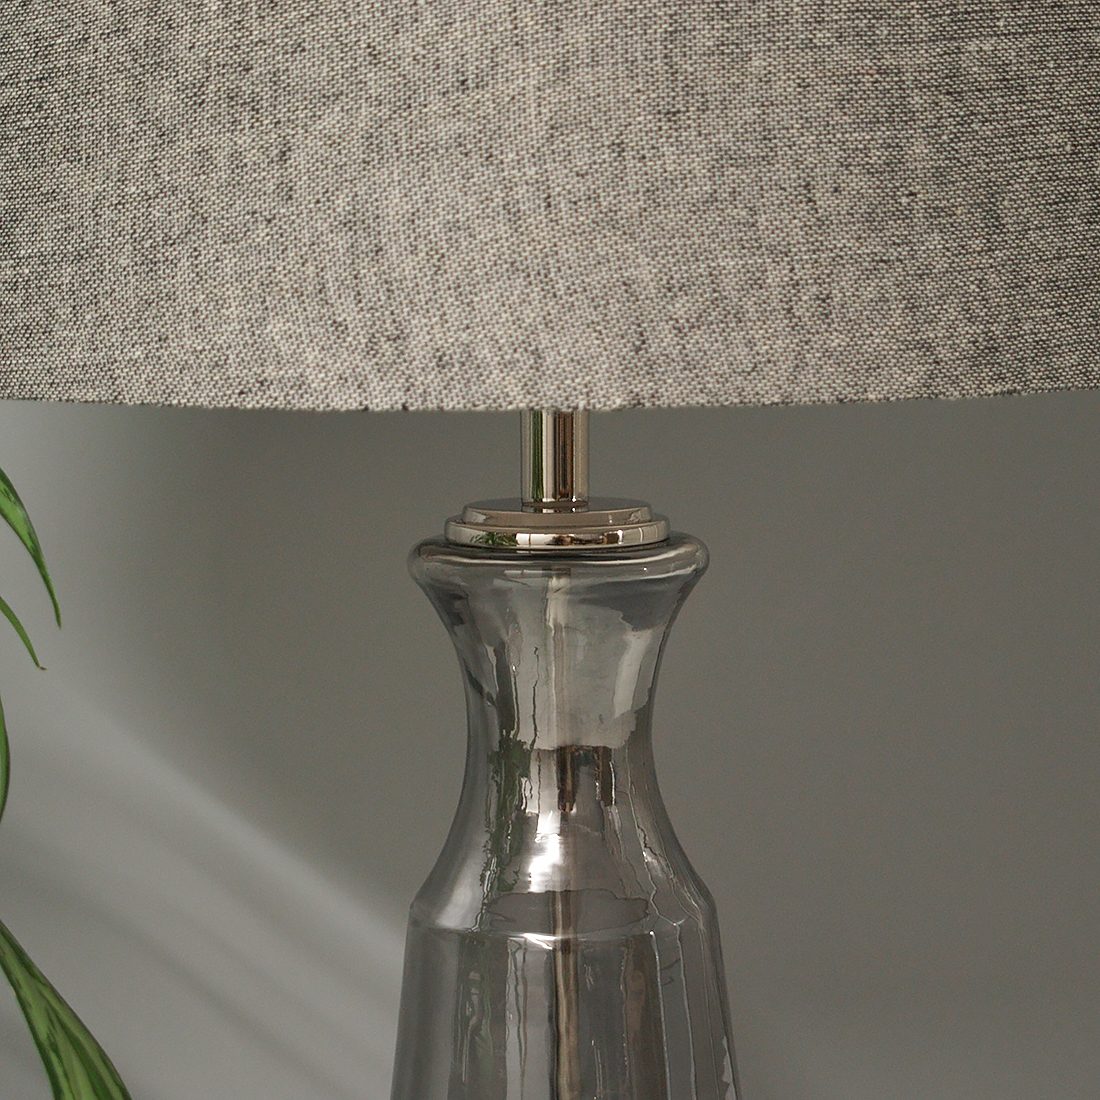 glass base lamp